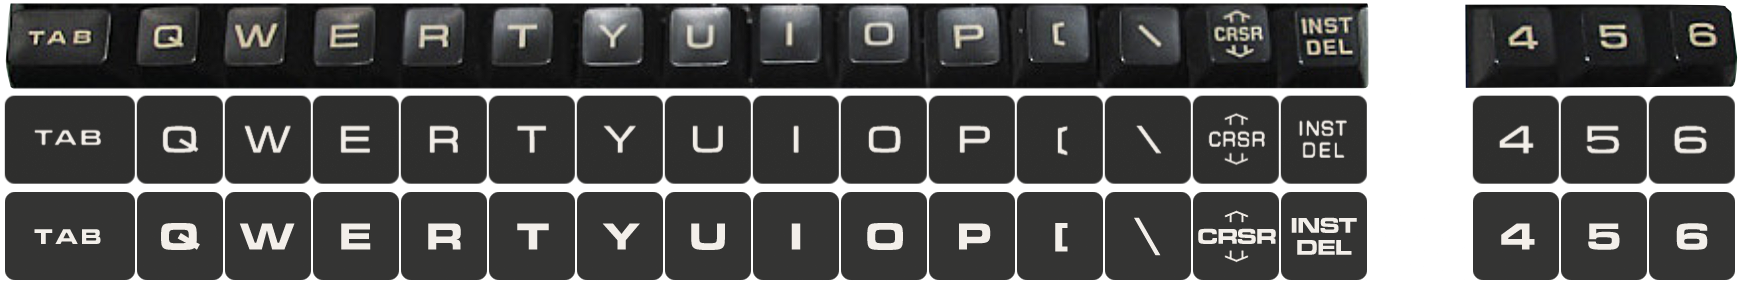 PET keyboard font comparison